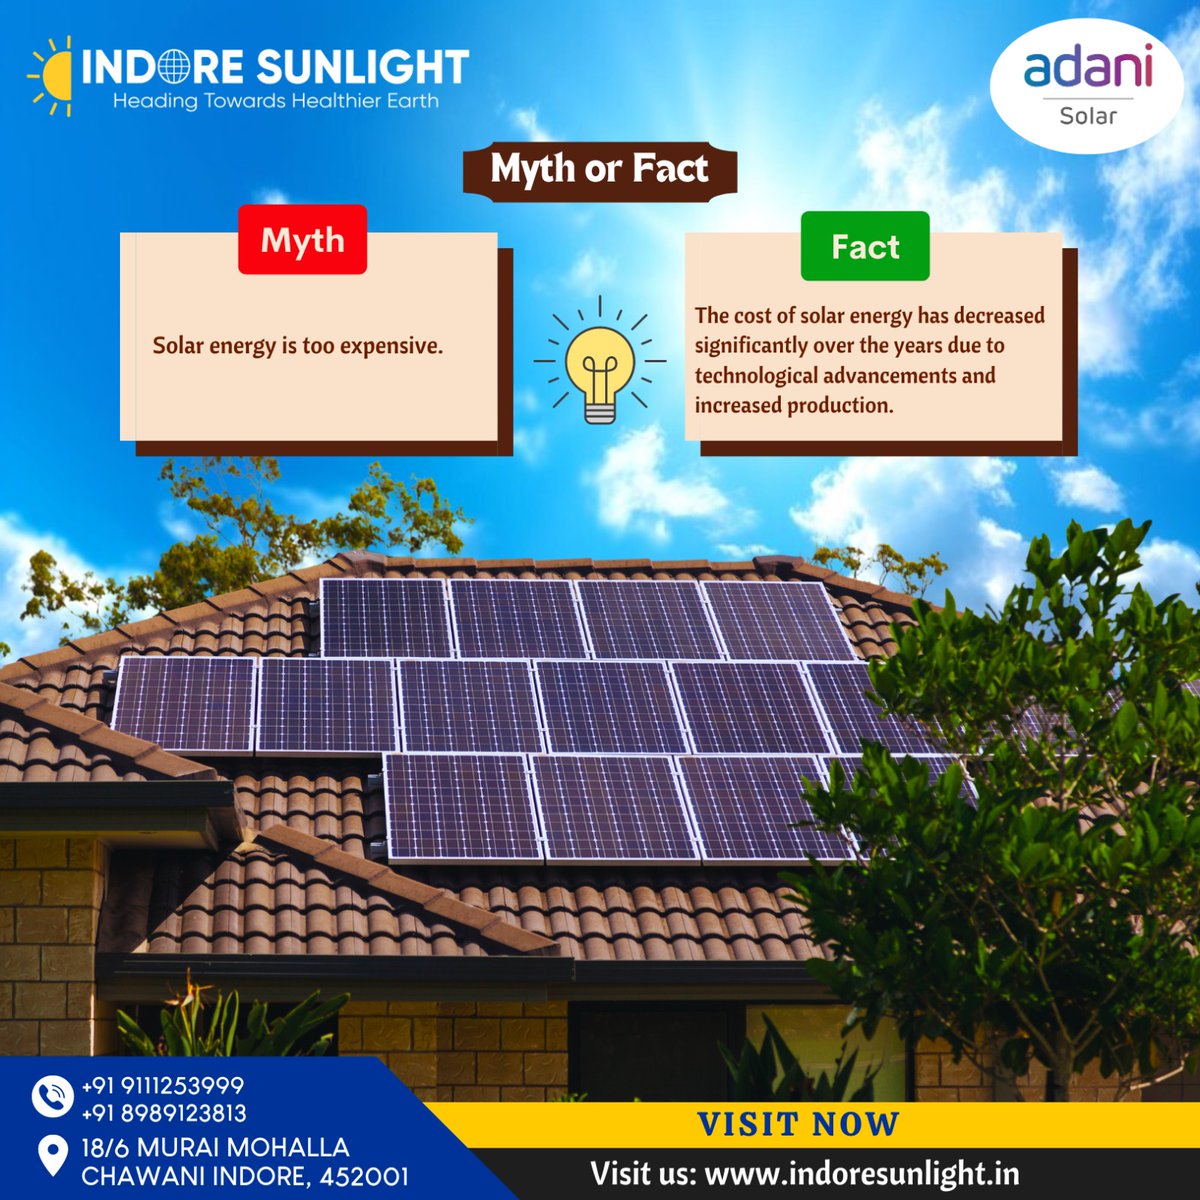 Harvesting the power of Indore's radiant sun with solar panels.
#SolarEnergy #CleanEnergy #IndoreSunlight #RenewableFuture
.
.
.
#IndoreSunlightthrough #SolarPanels #RenewableEnergy #SustainableLiving #GreenTechnology #CleanPower #SolarRevolution #GoGreen #ClimateAction